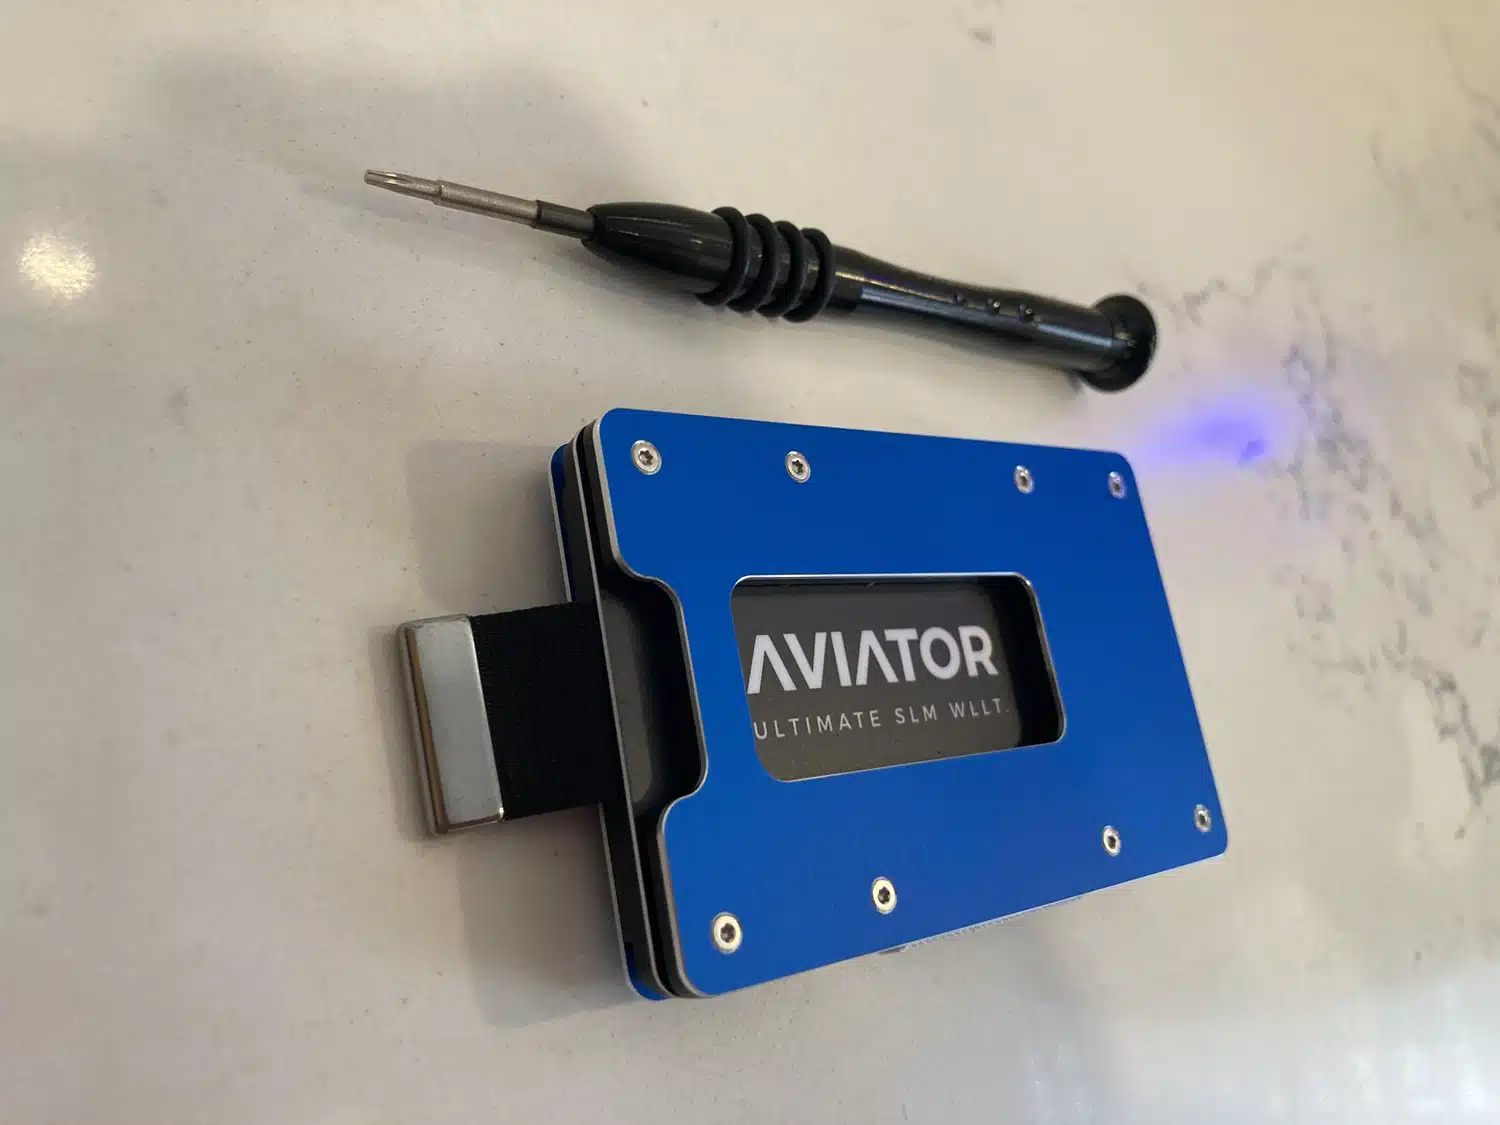 Aviator Slide Wallet with screwdriver